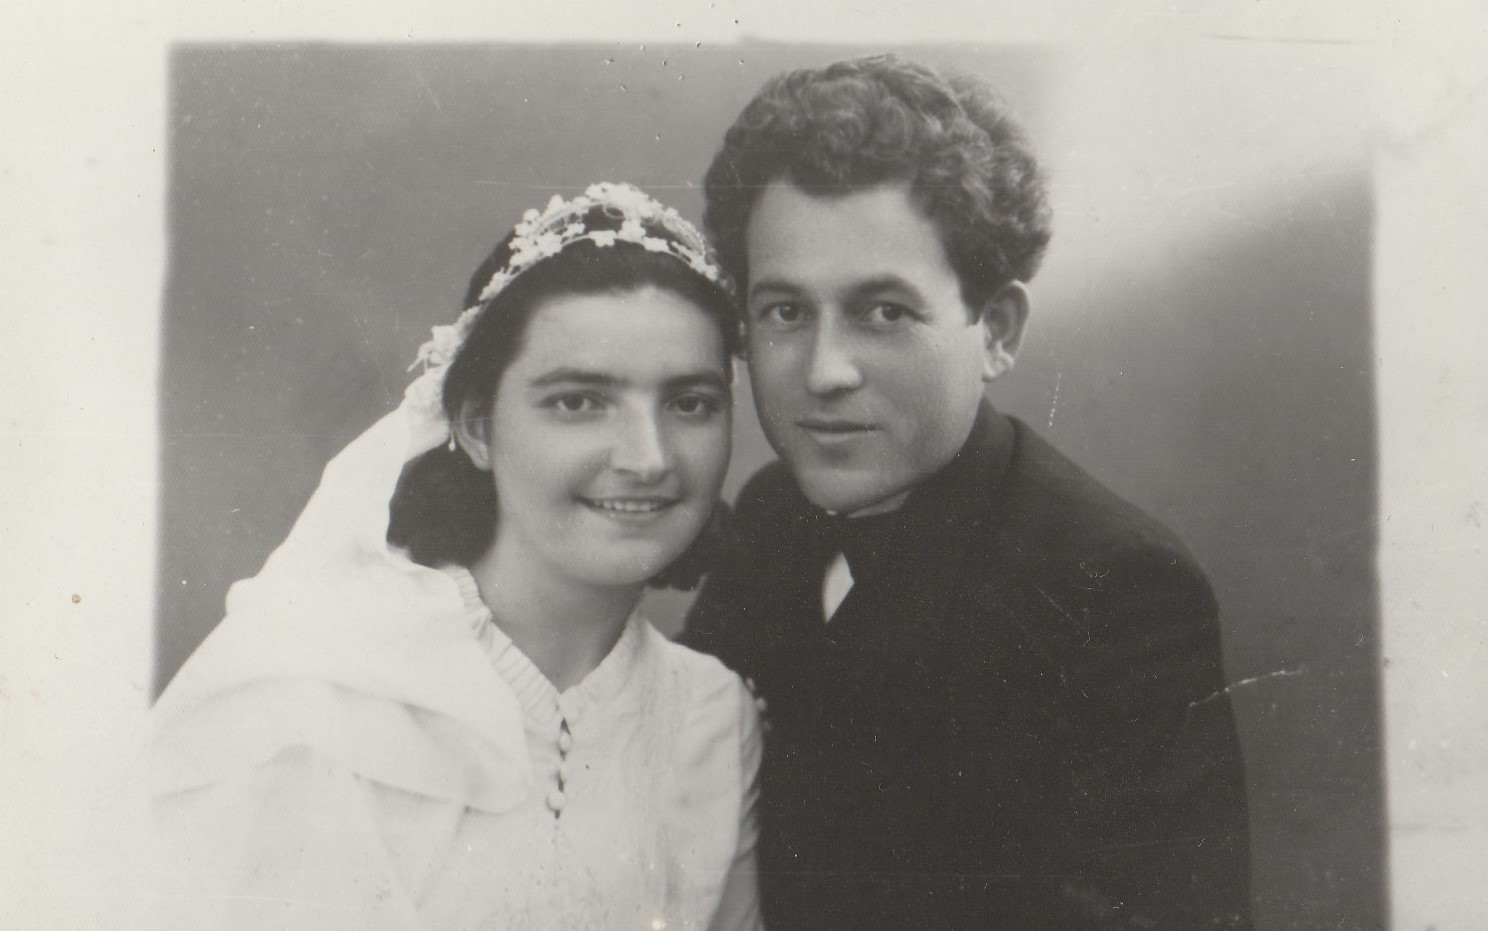 Wedding Photograph of the couple Marika and Dimitar Stoyanovi, 1939, Pernik region.